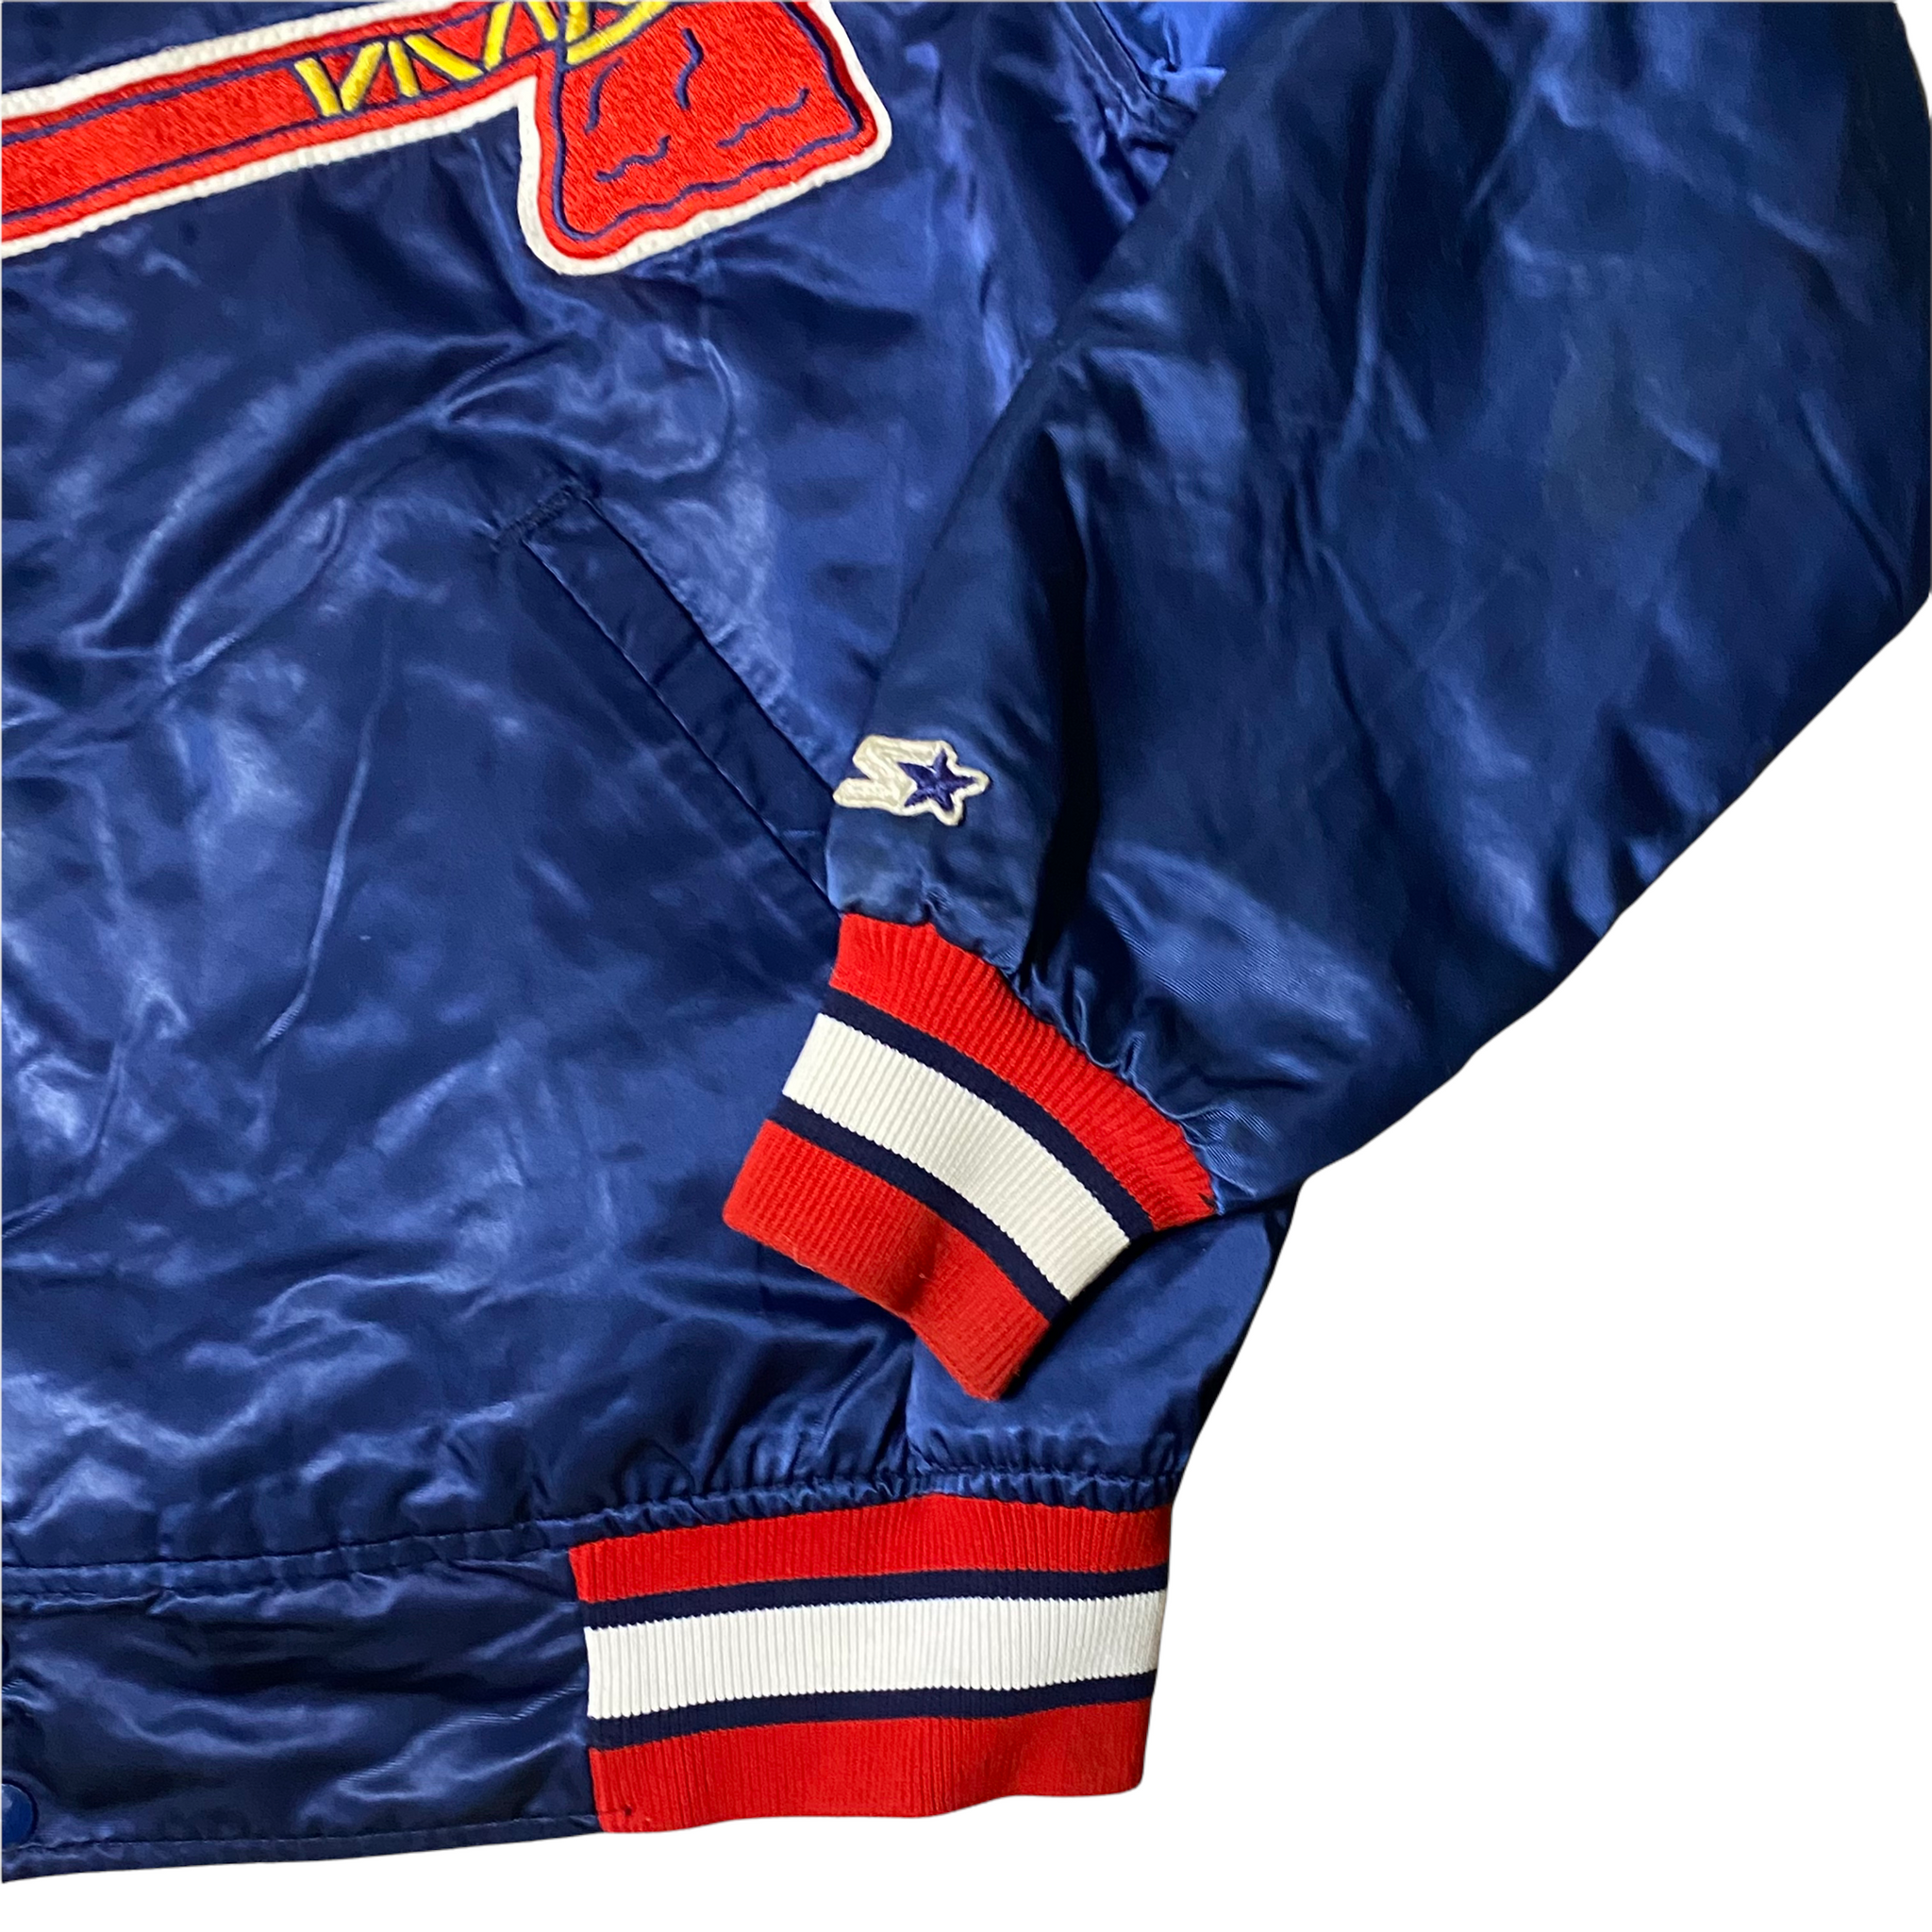 Atlanta Braves Vintage Starter Satin Bomber Jacket Made in 